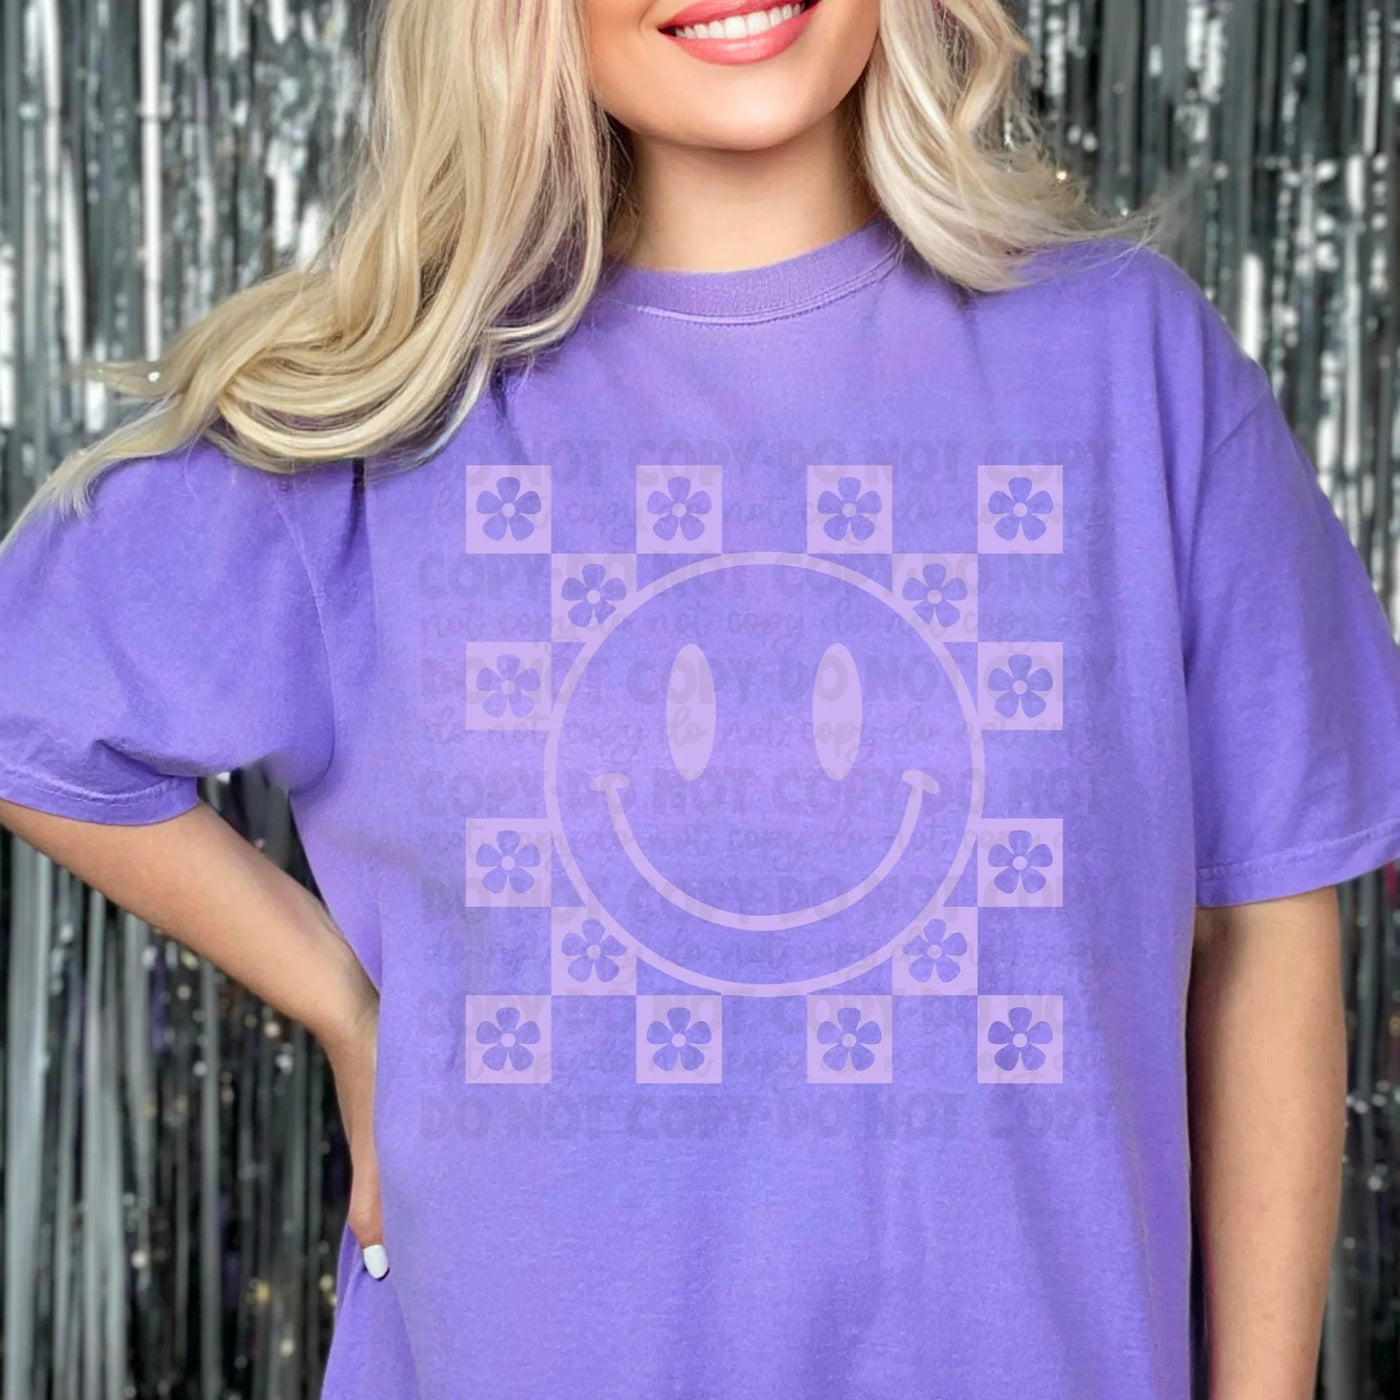 READY TO SHIP "Checkered Happy Face" T-shirt